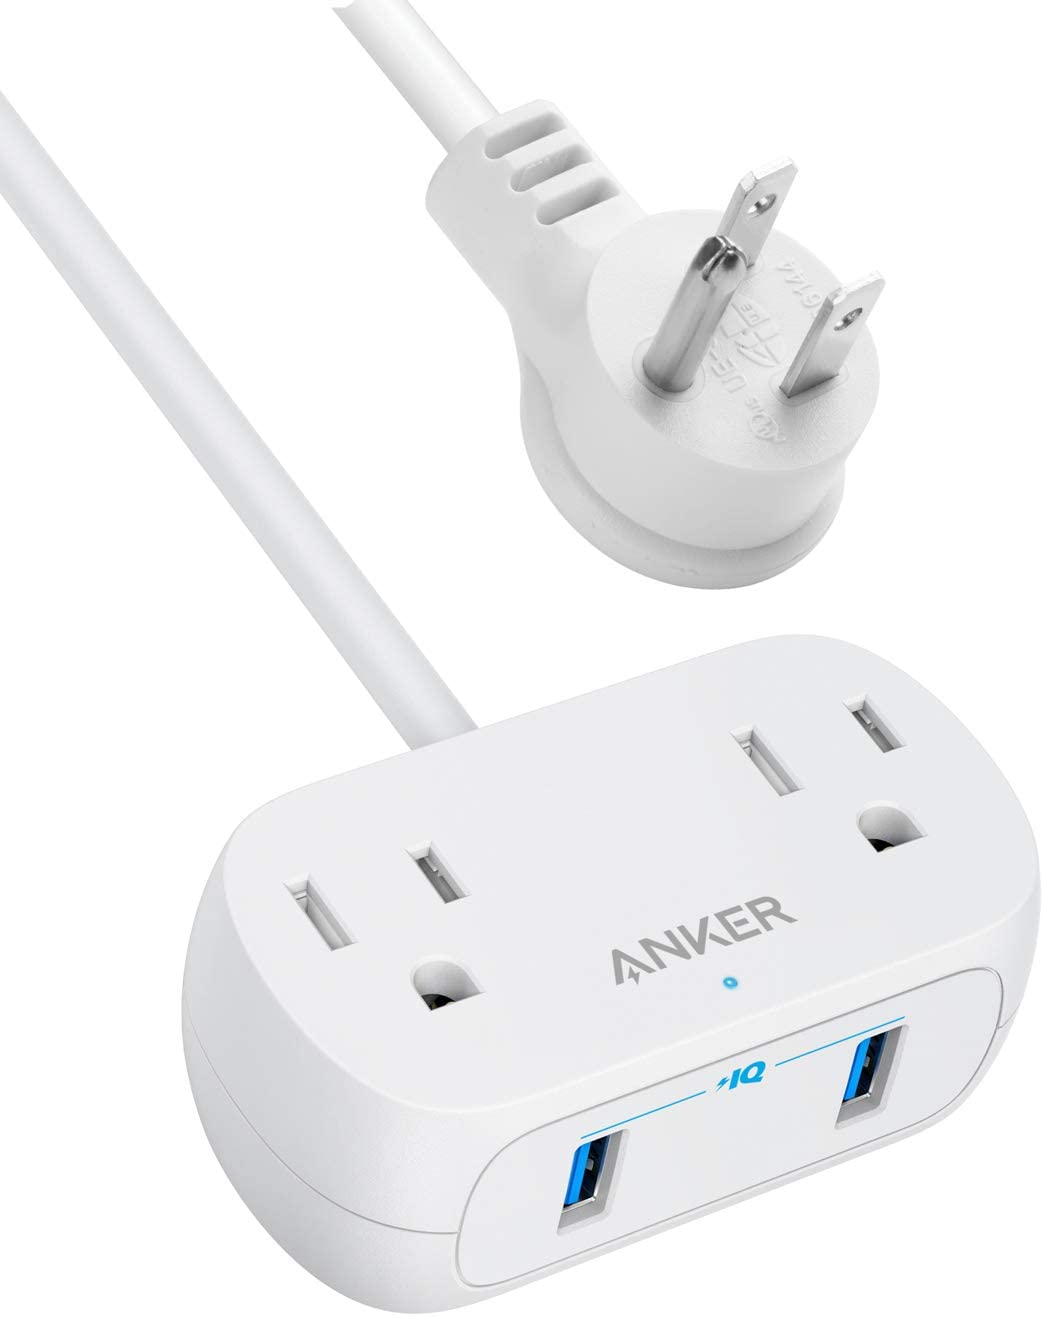 Anker PowerExtend 4-In-1 Mini Flat USB Extension Cord, 5-Foot